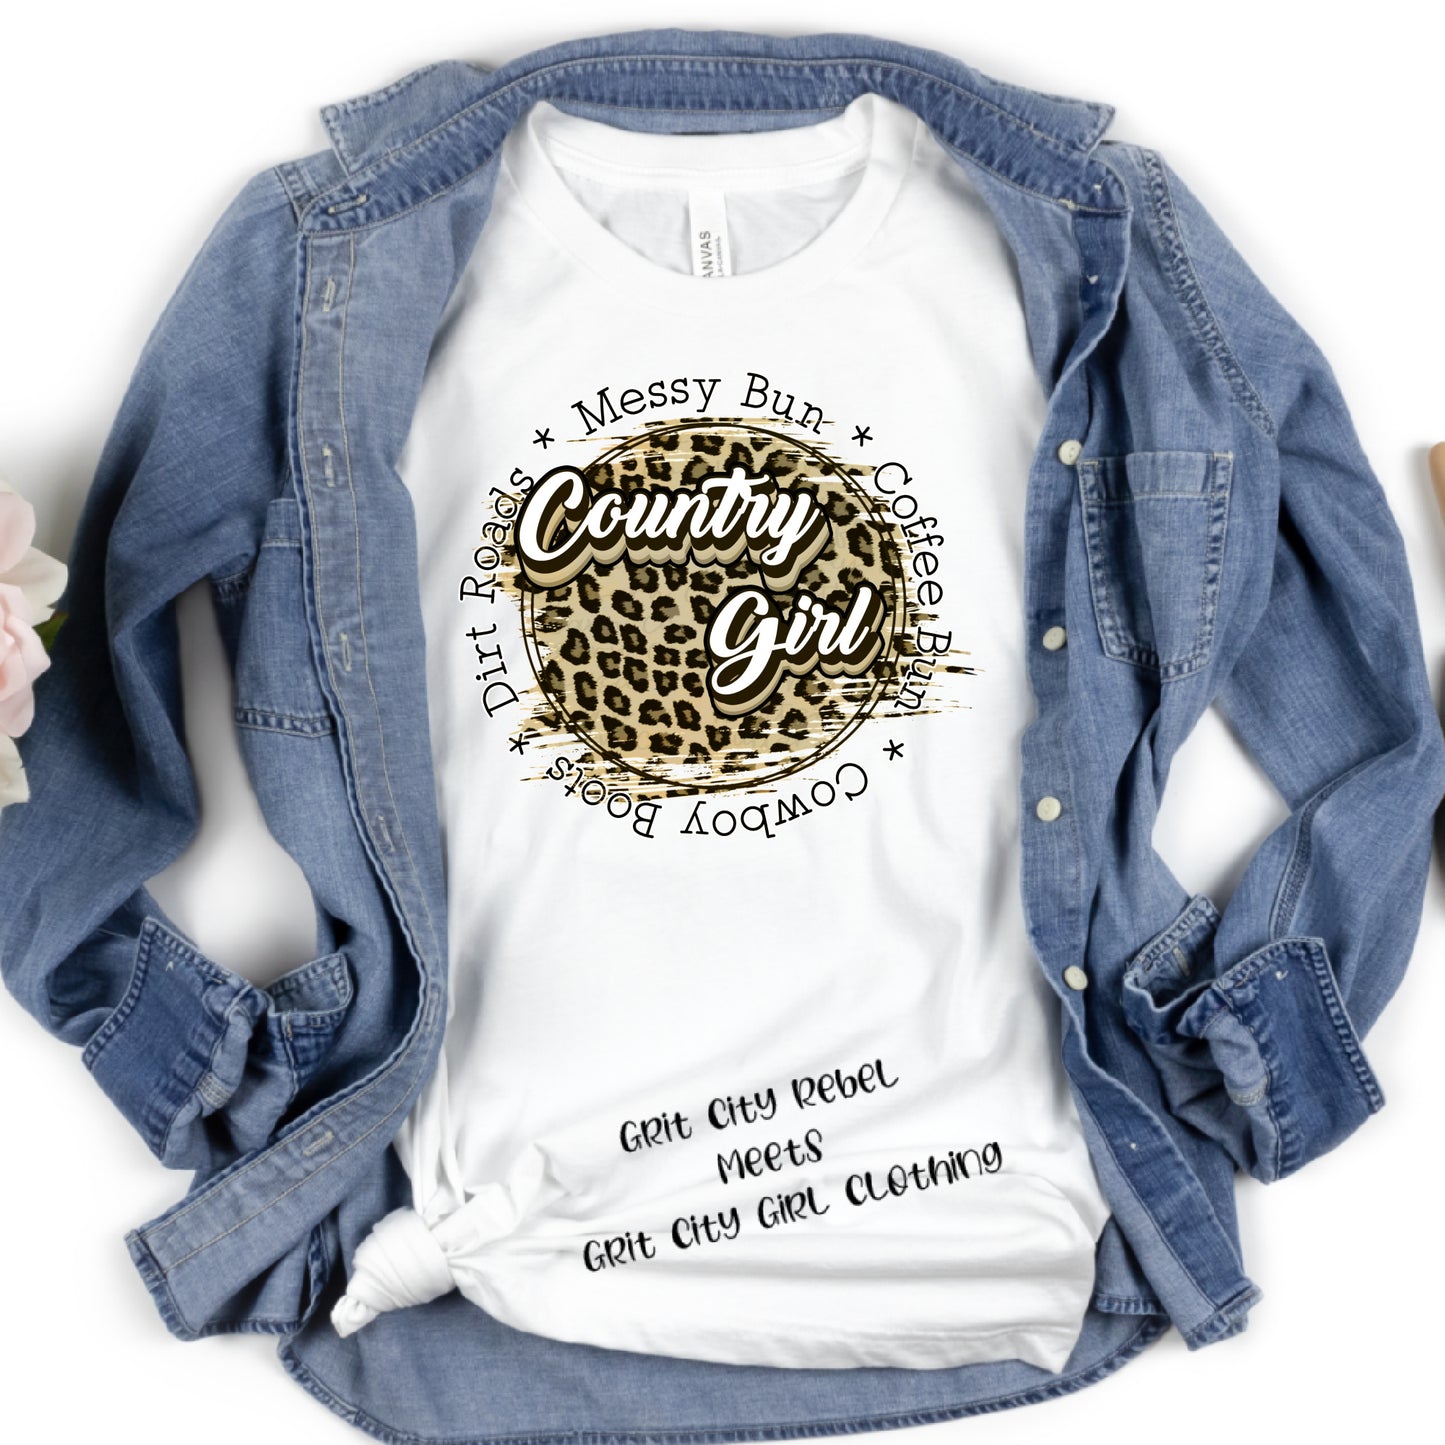 Lropard print and writing Messy Bun Coffee Bun Cowboy Boots Dirty Roads Country themed unisex short sleeve T-shirt